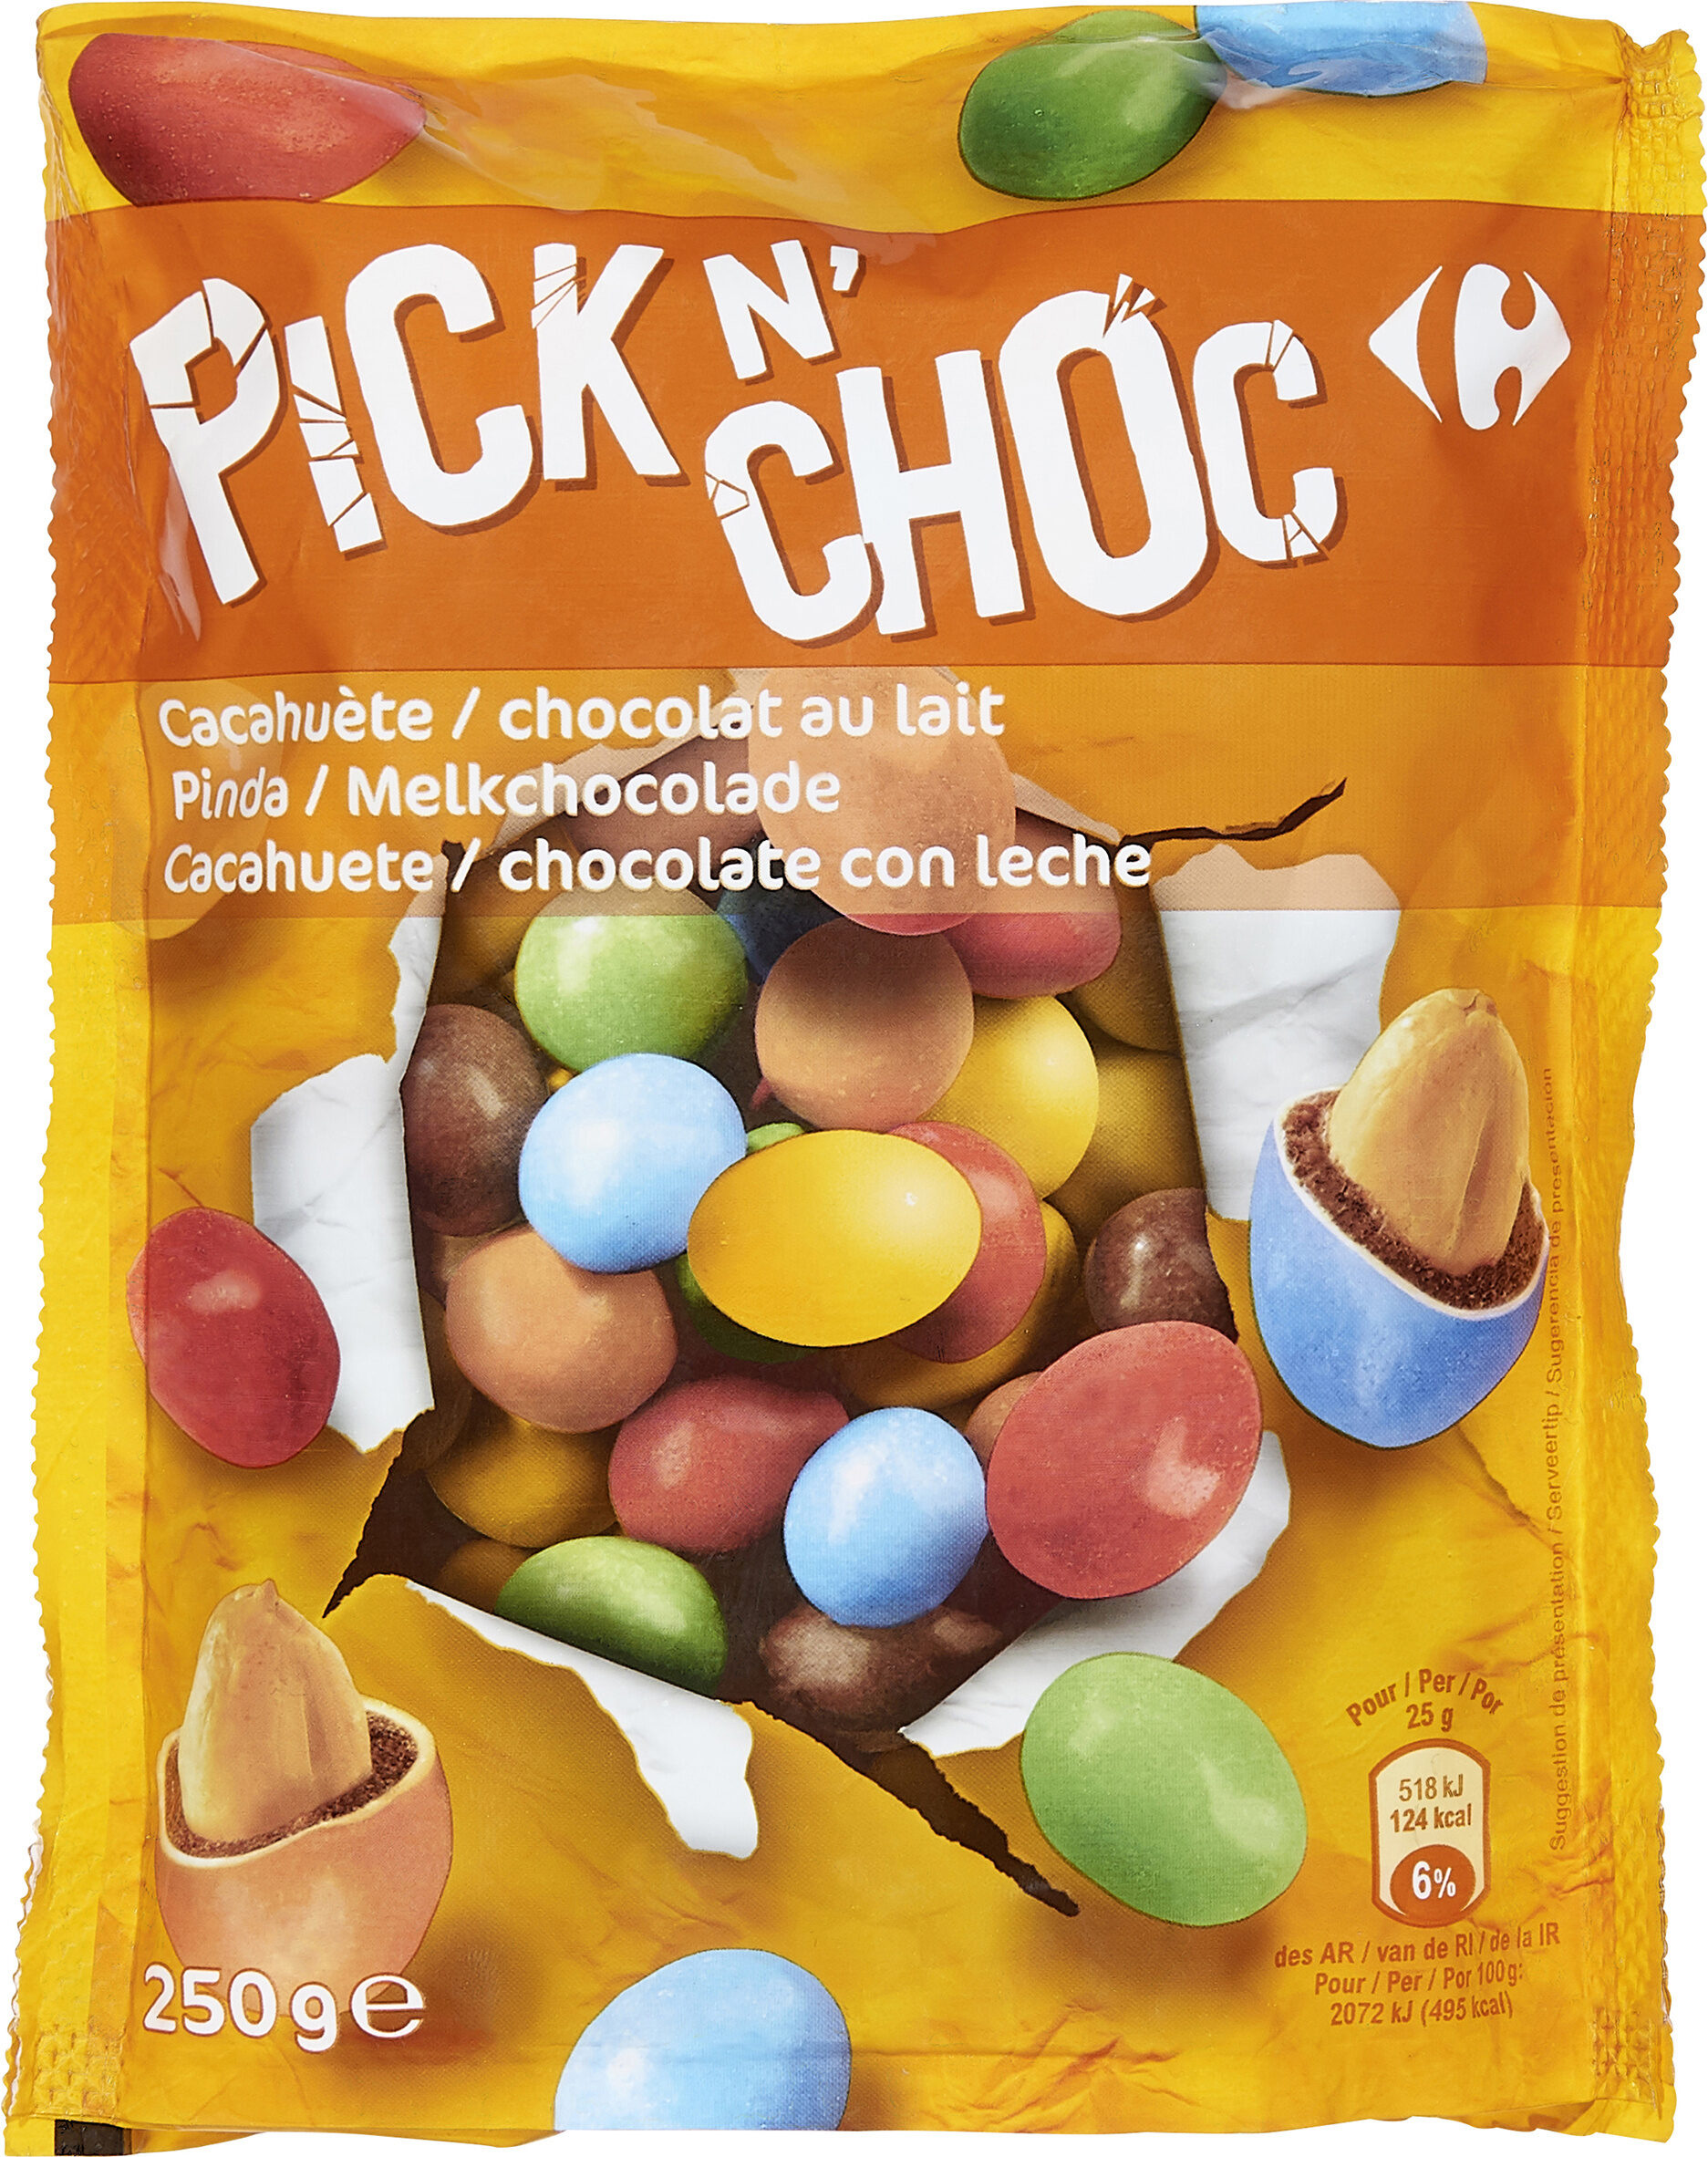 Pick n' choc - Producto - fr